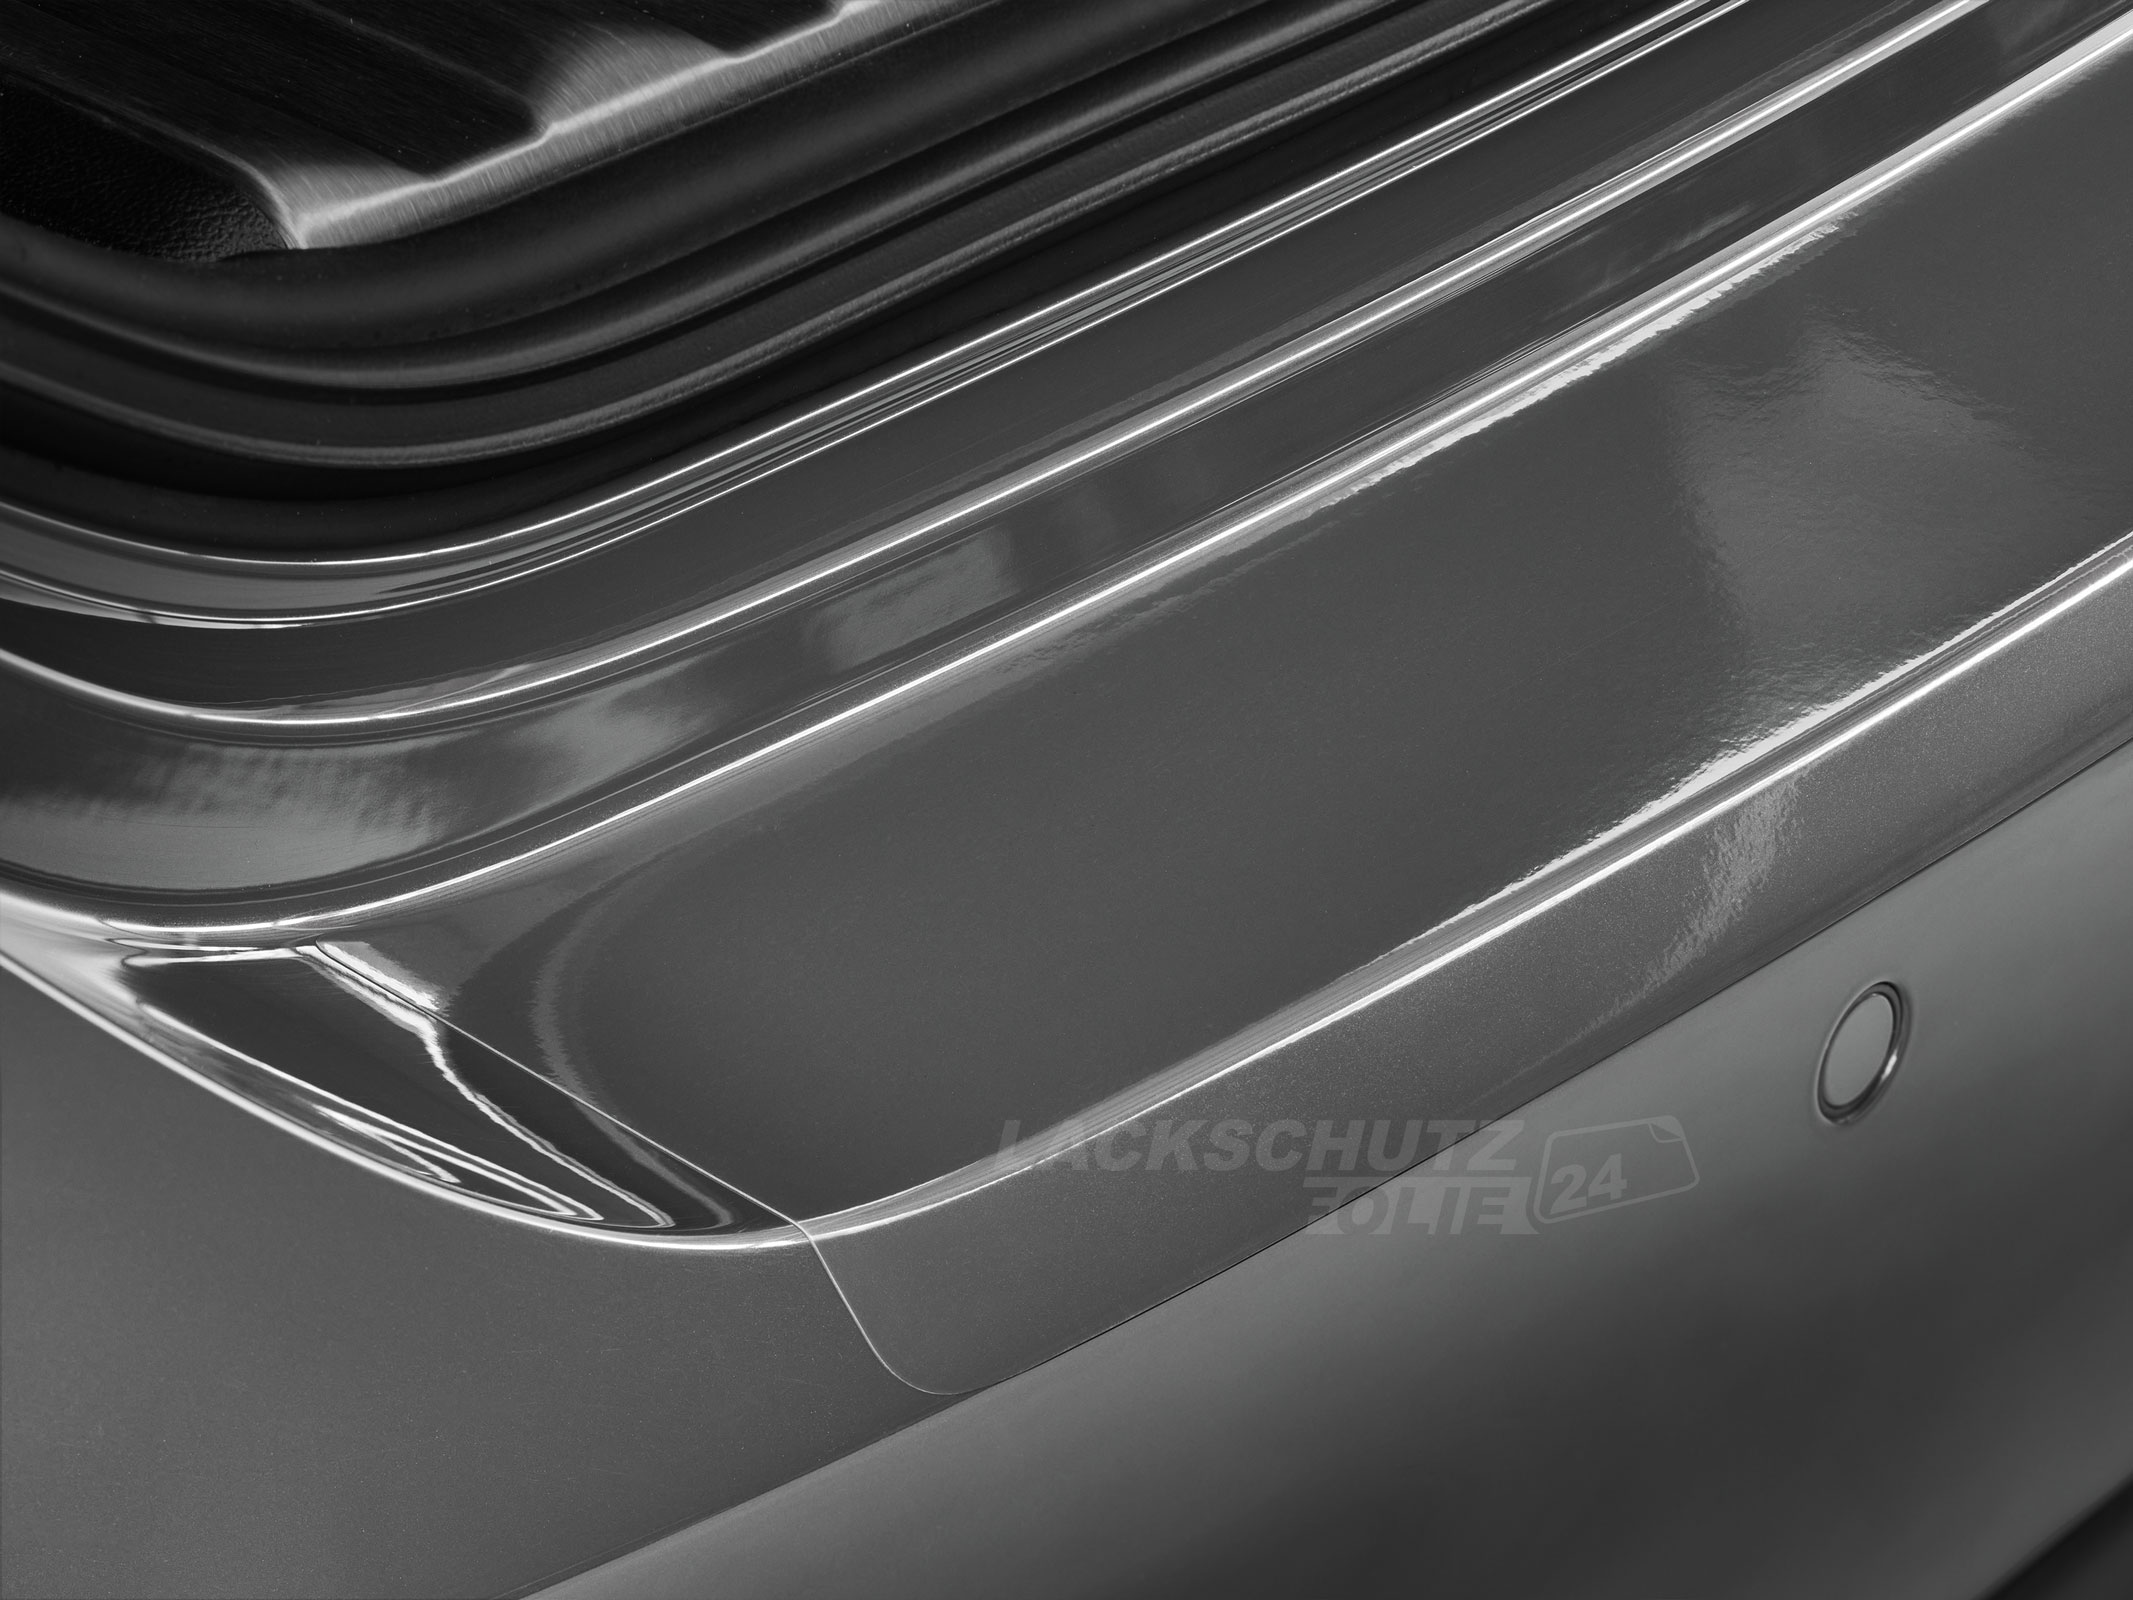 Ladekantenschutzfolie - Transparent Glatt Hochglänzend 150 µm stark für SsangYong Rexton Typ W, BJ 2012-2017